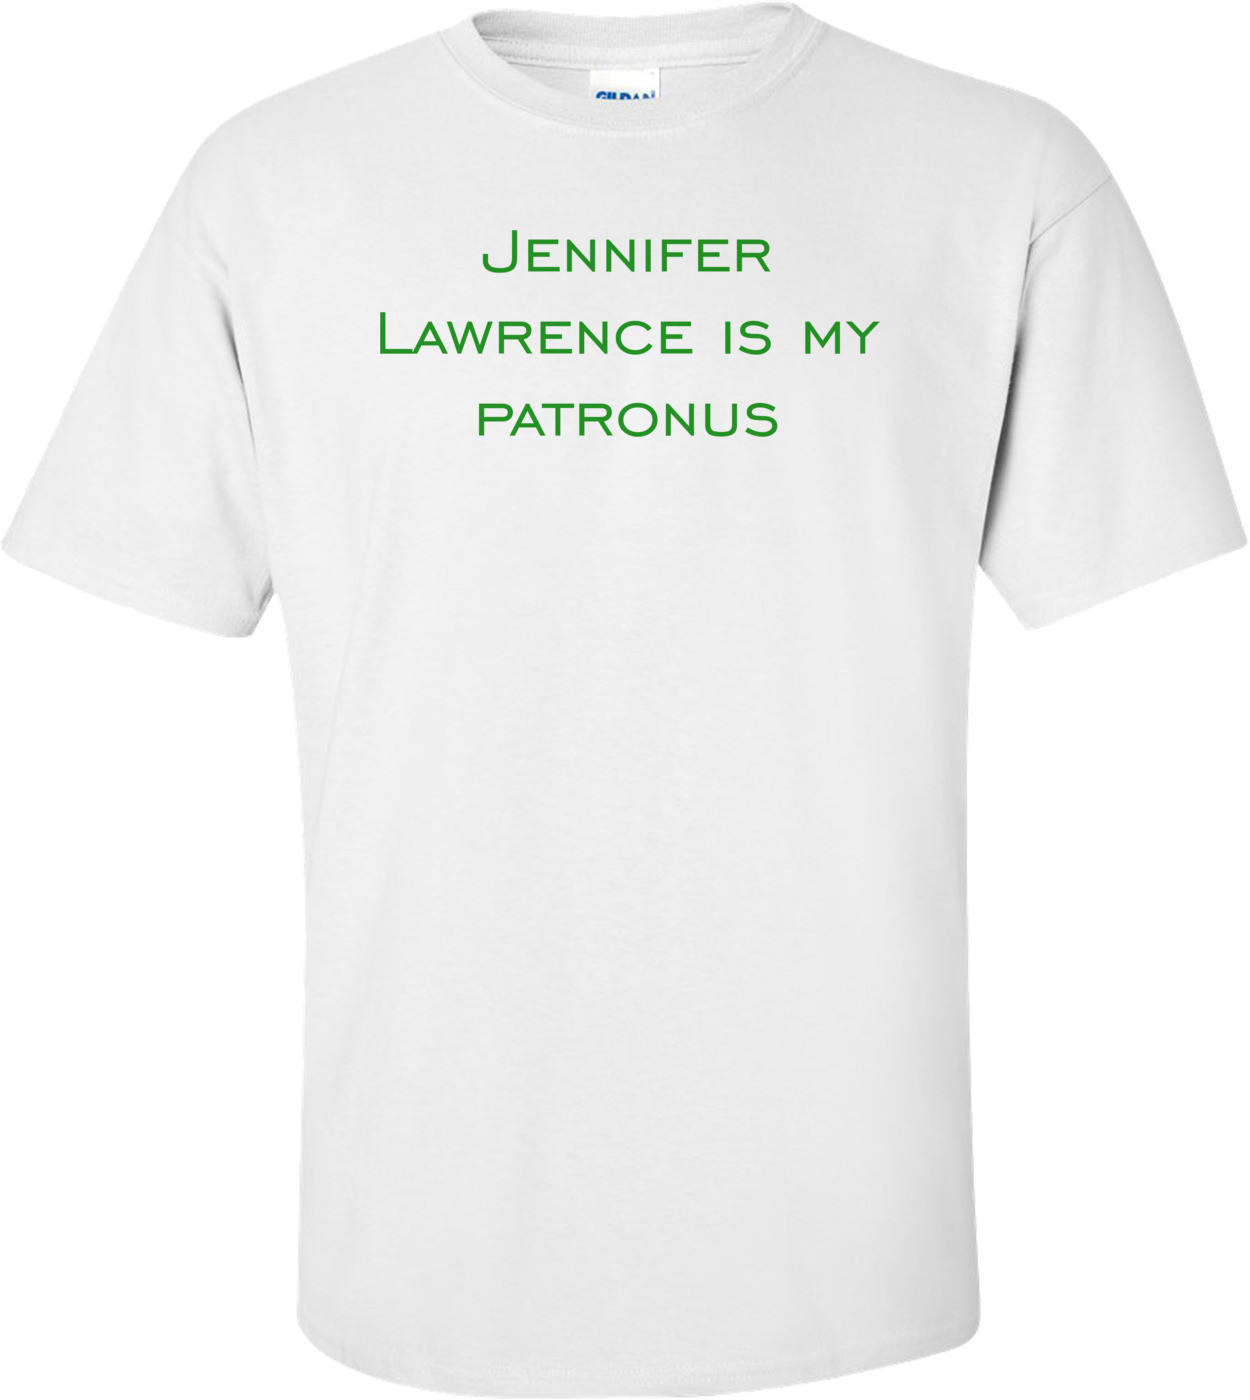 Jennifer Lawrence is my patronus Shirt